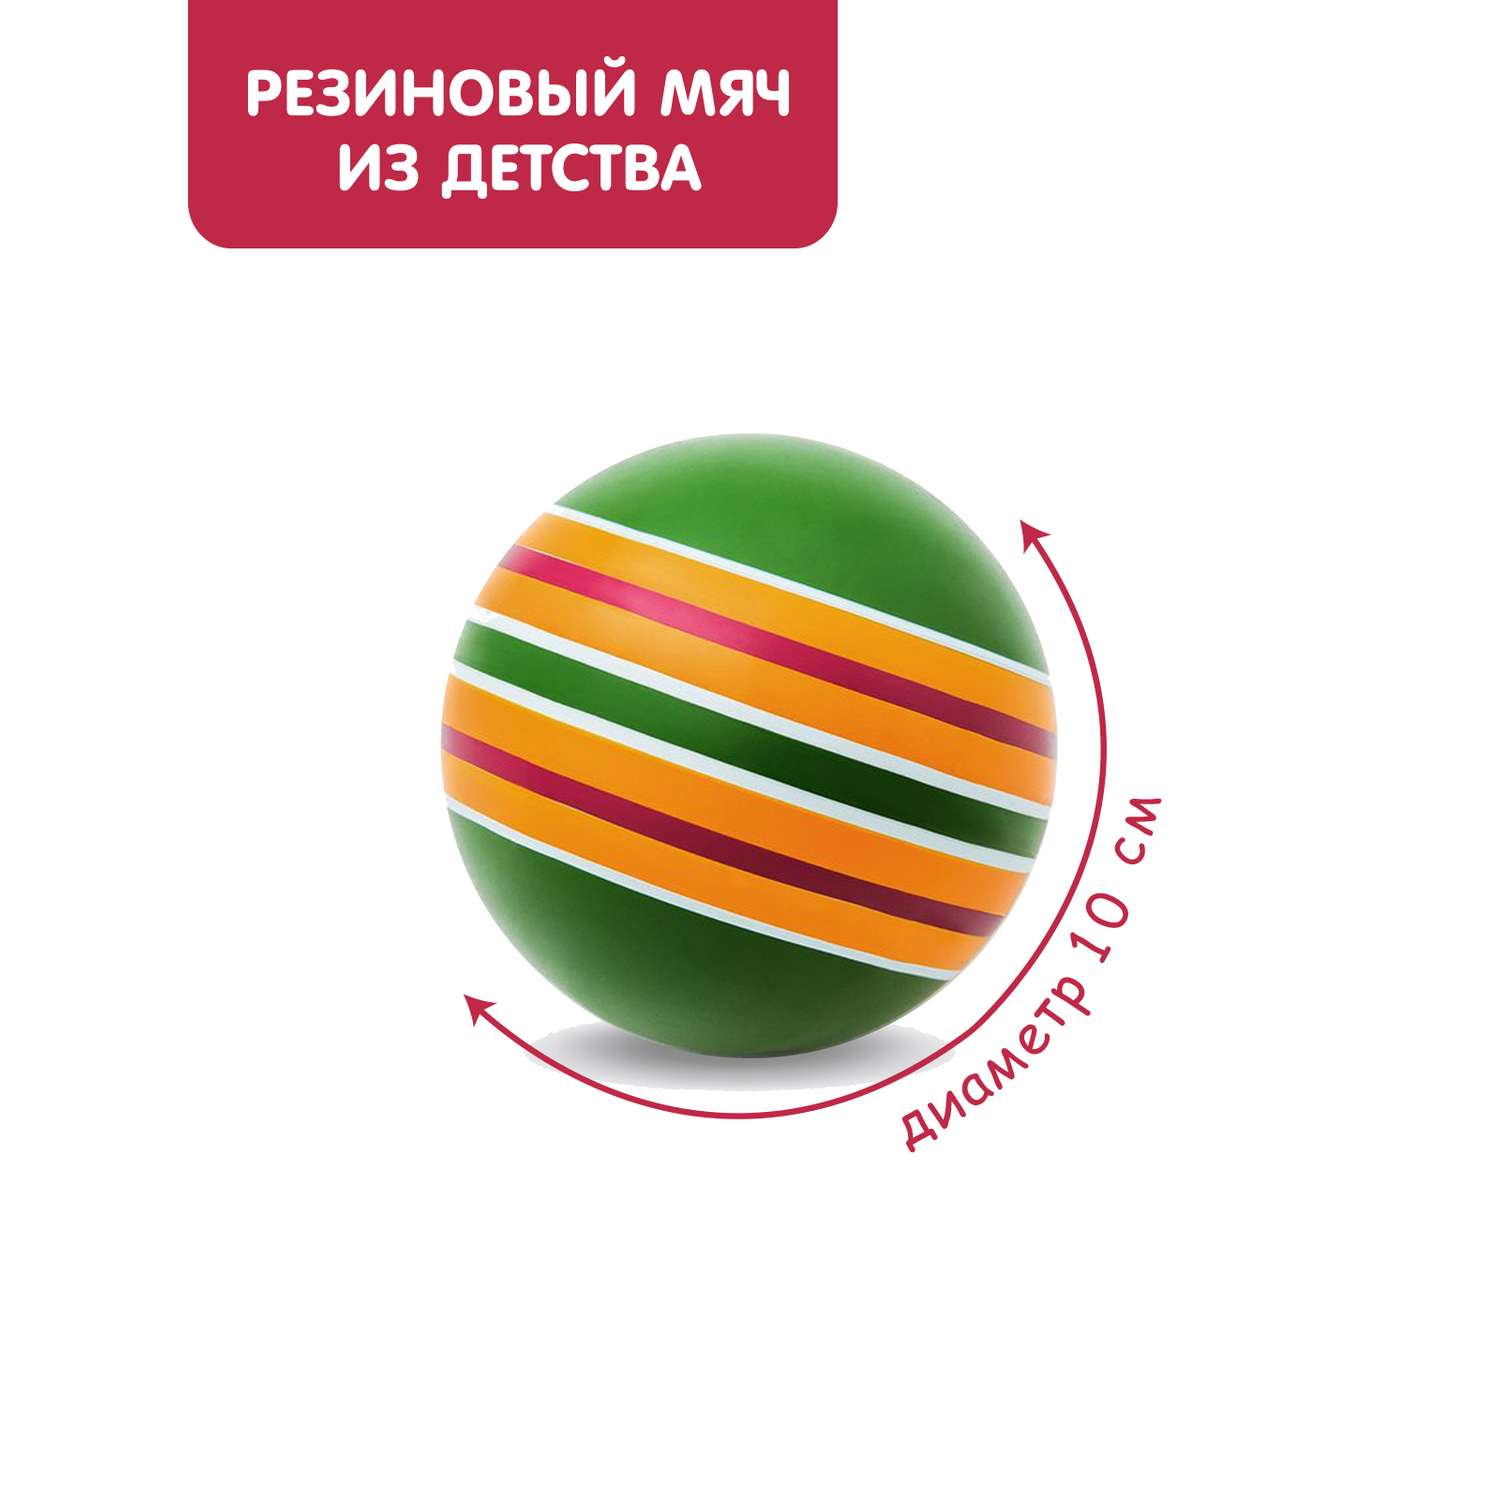 Мяч ЧАПАЕВ диаметр 100 мм Тропинки зеленый фон оранжевые полоски - фото 1